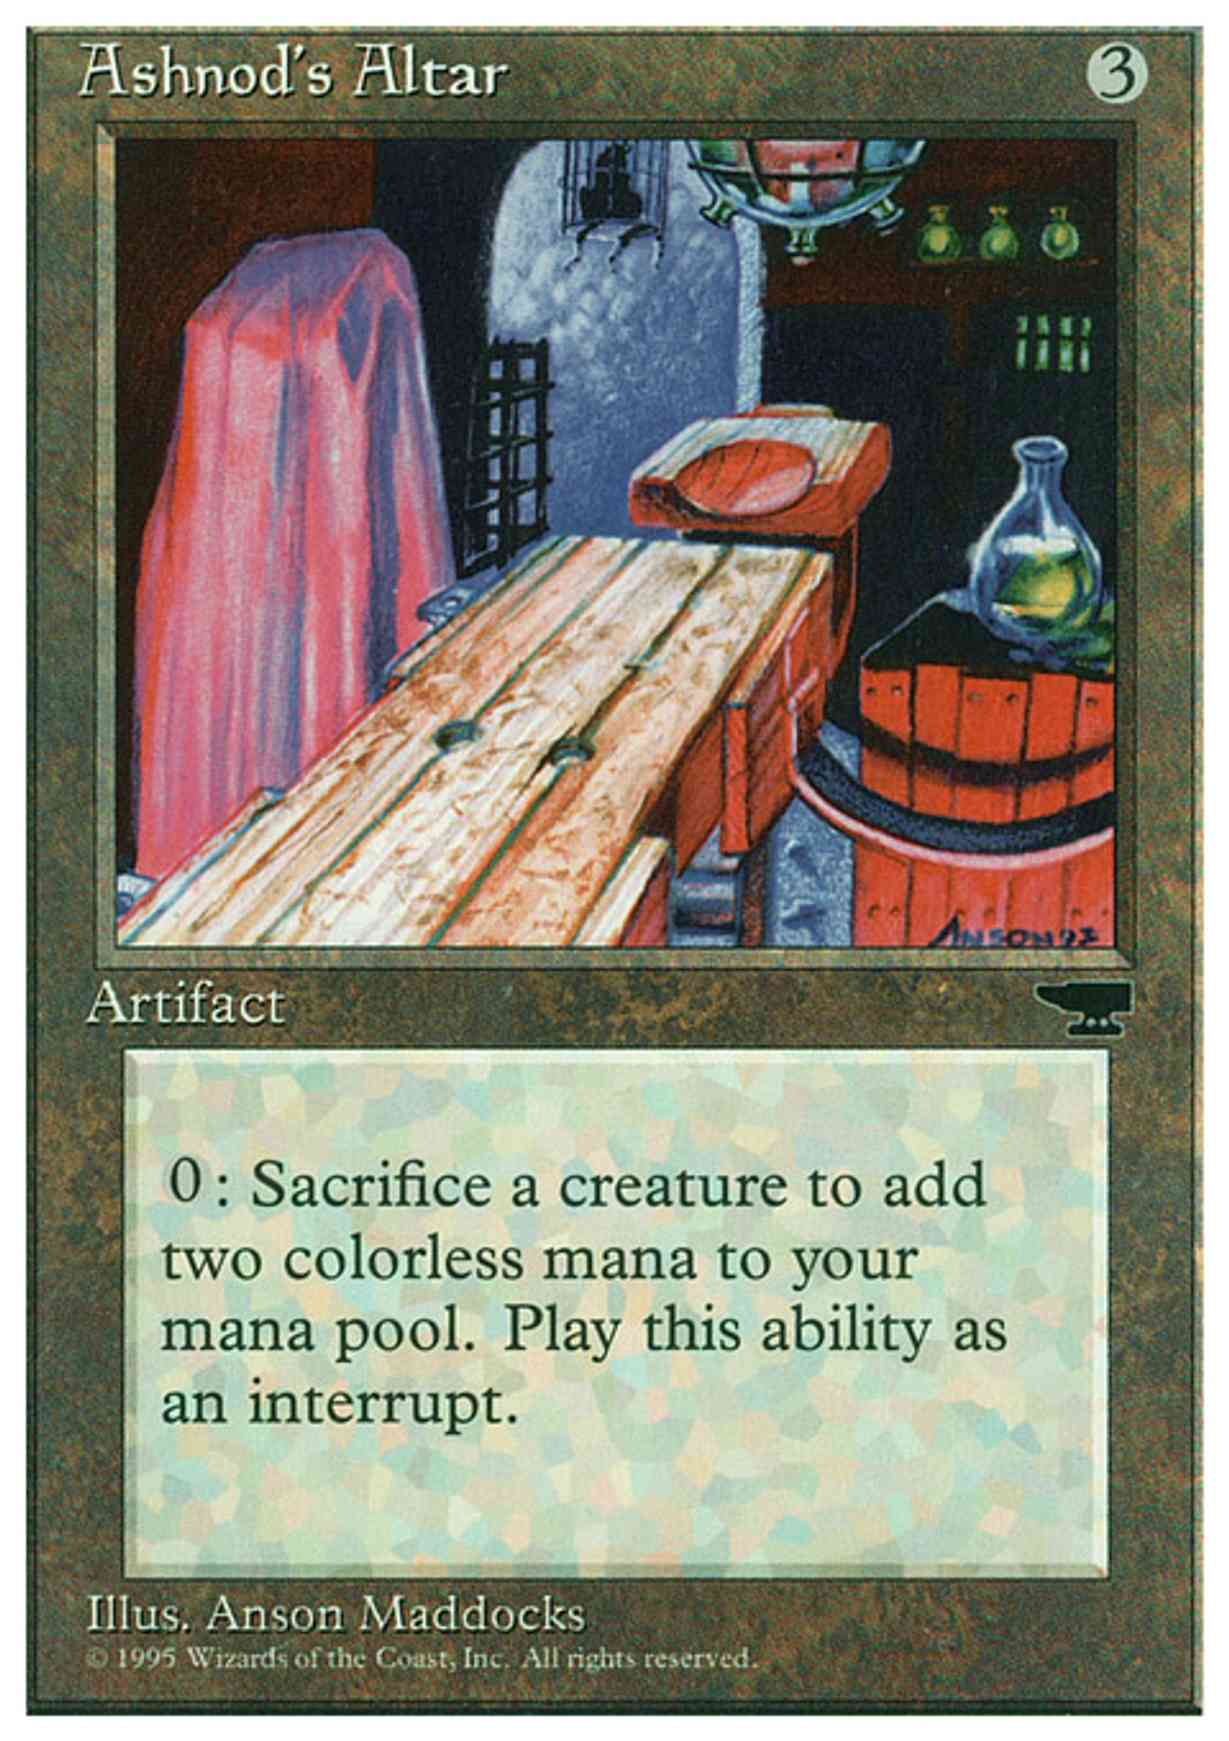 Ashnod's Altar magic card front